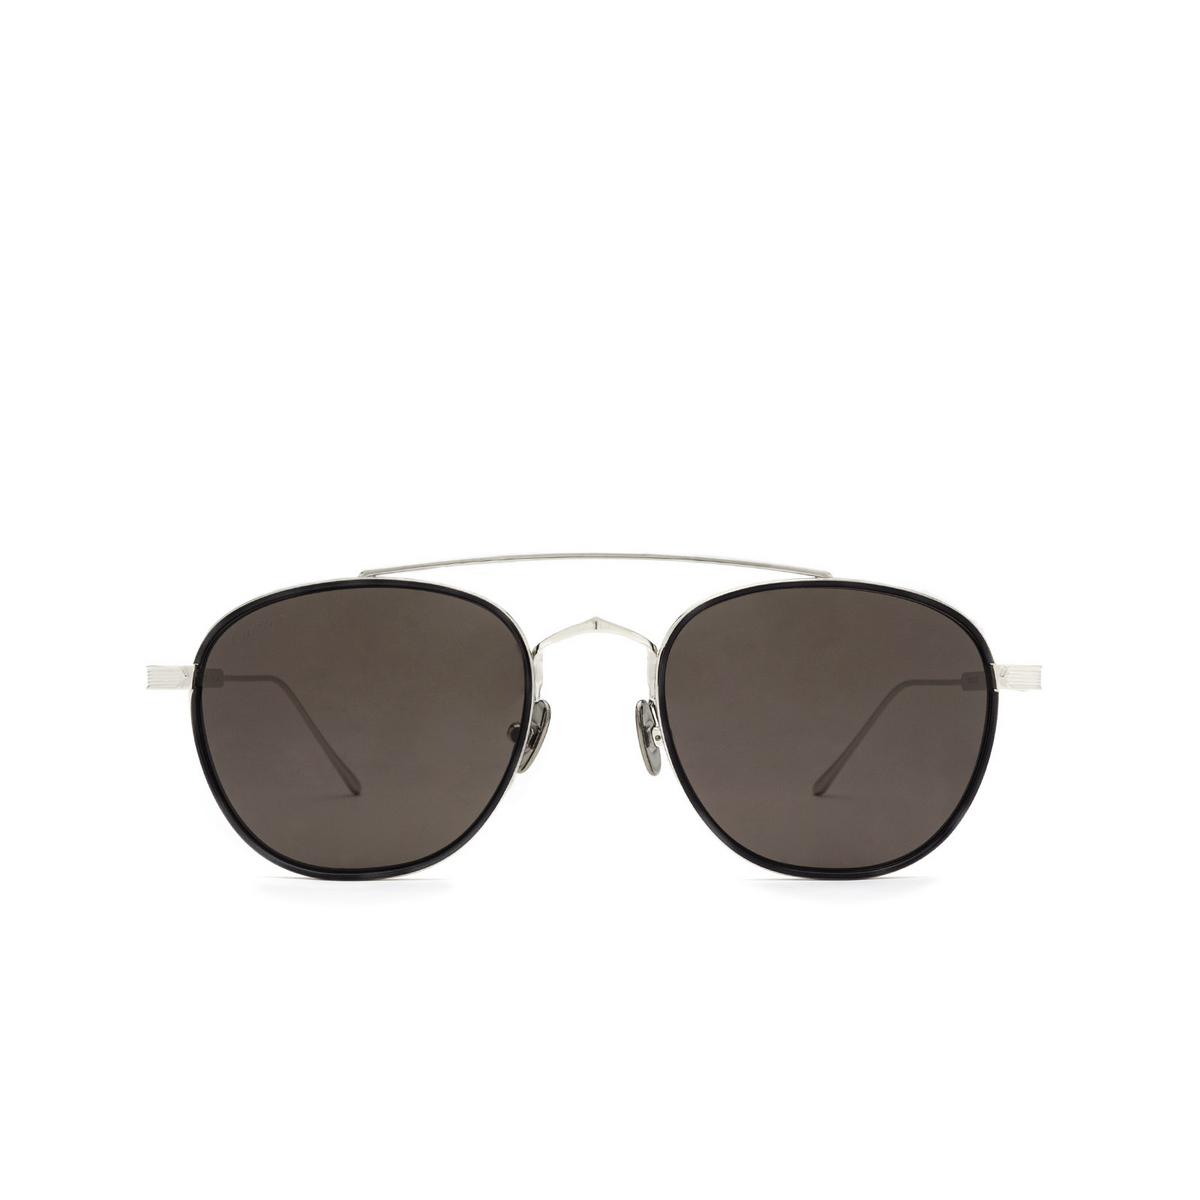 Cartier® Square Sunglasses: CT0251S color Silver 003 - front view.